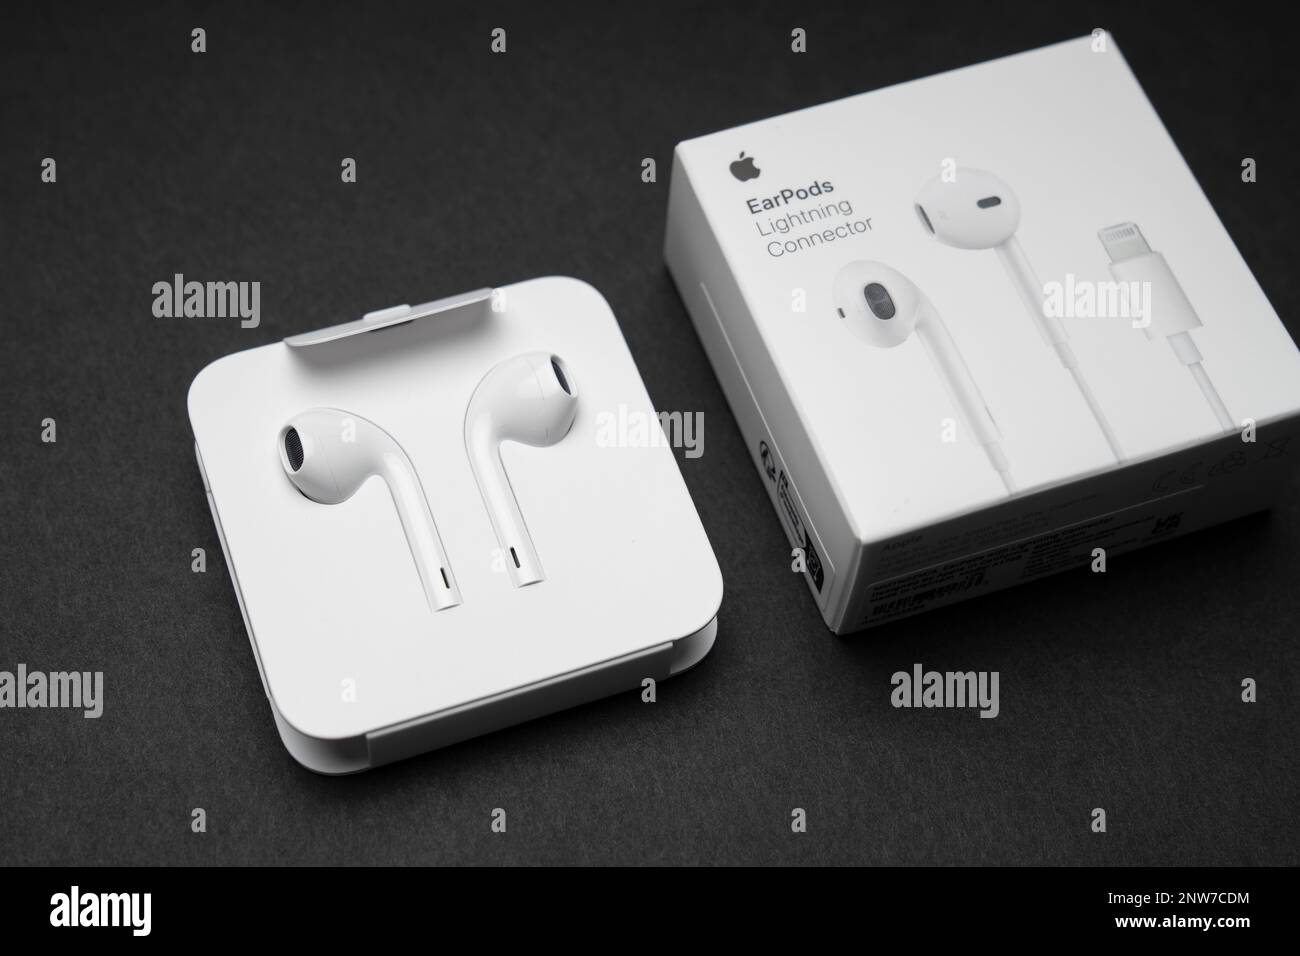 Auriculares EarPods Apple Original Conector Lightning - Blanco - Spain